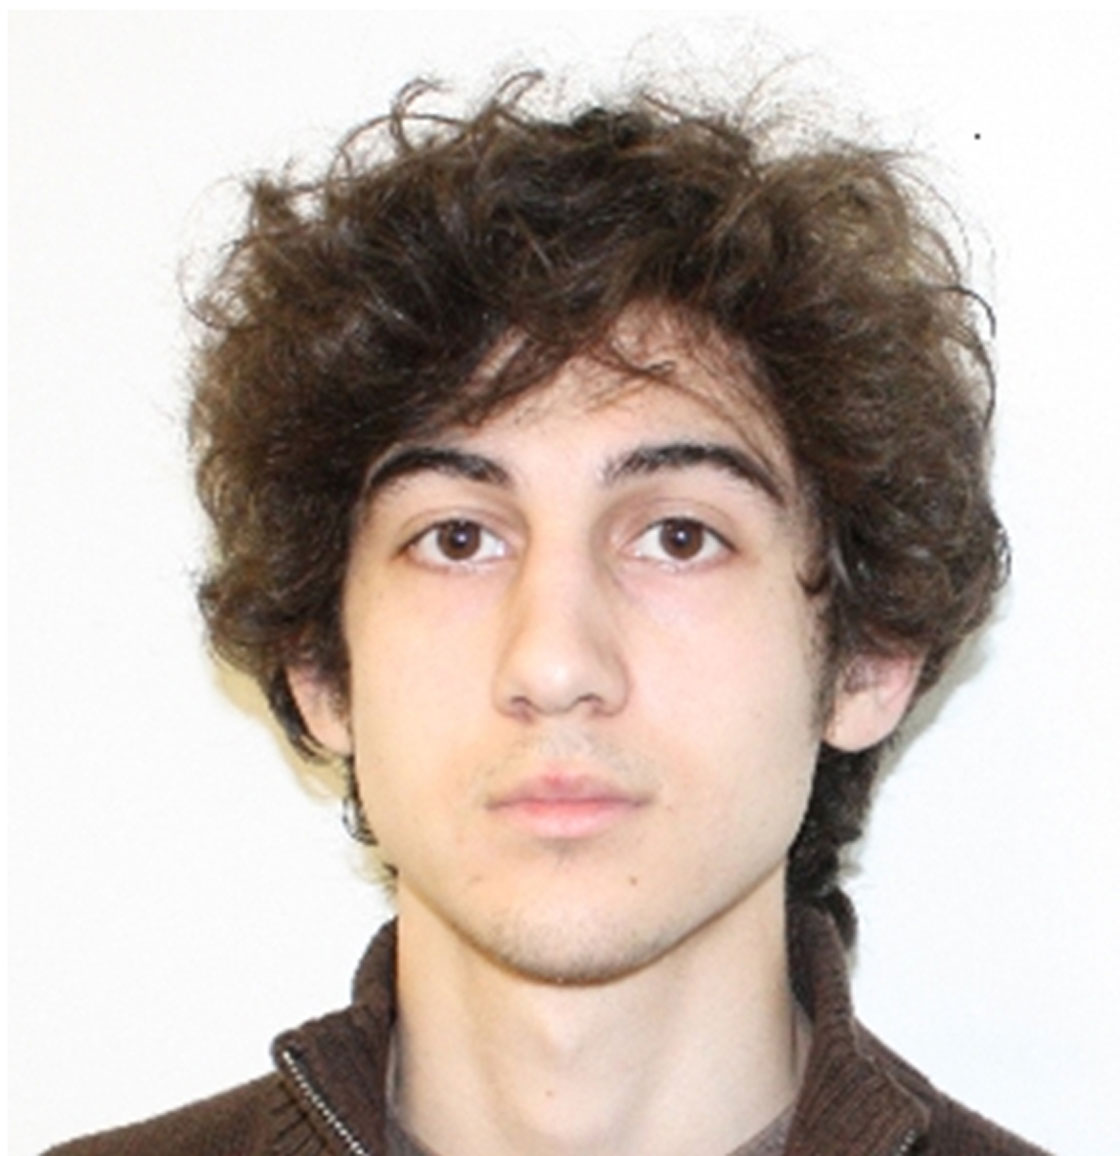 An image of Dzhokar Tsarnaev, age 19, previously identified as Suspect 2 in the Boston Marathon bombing investigation.